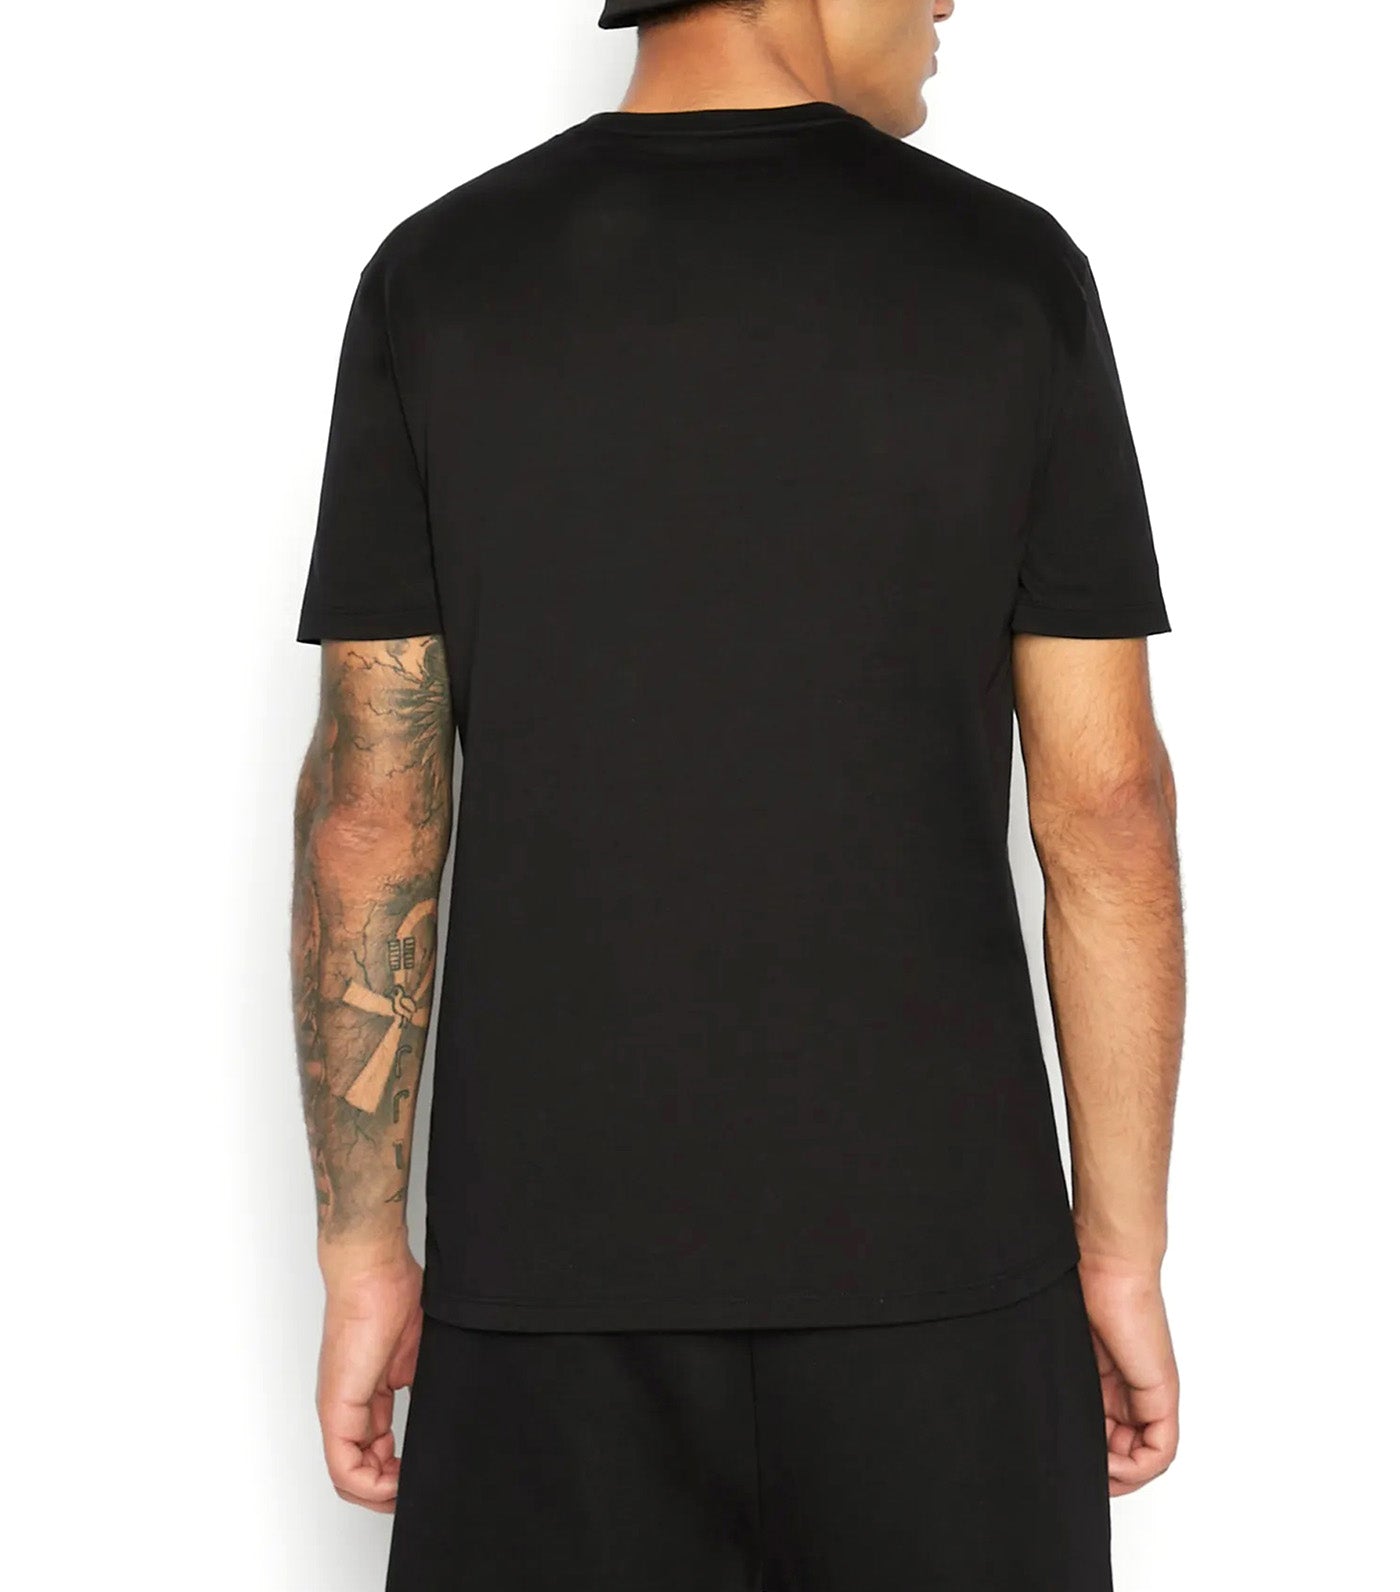 Armani Exchange Basics By Armani Organic Jersey Crew Neck T-Shirt Black